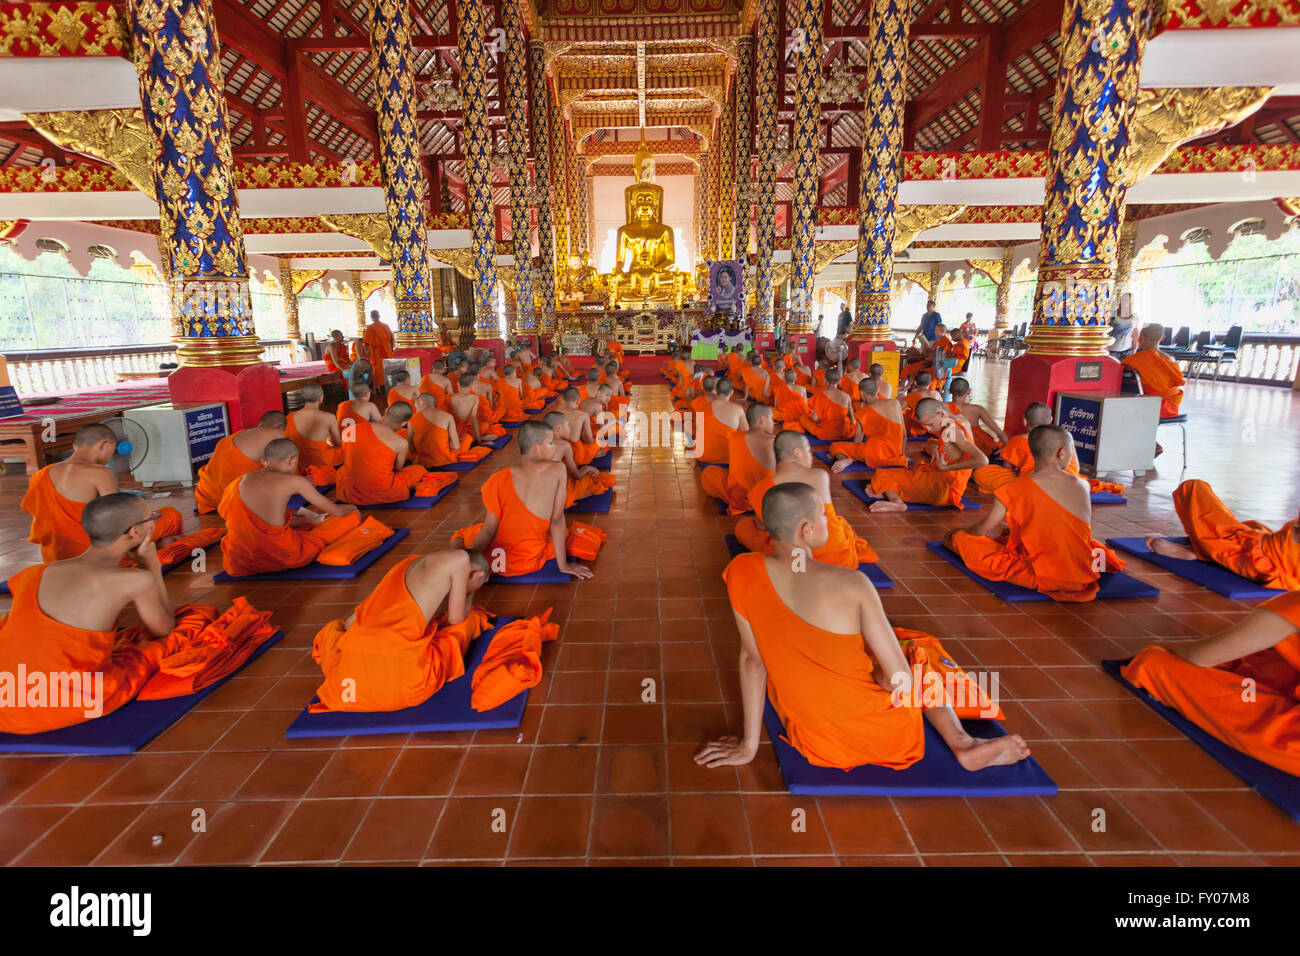 Image result for buddhist monk praying in garden\